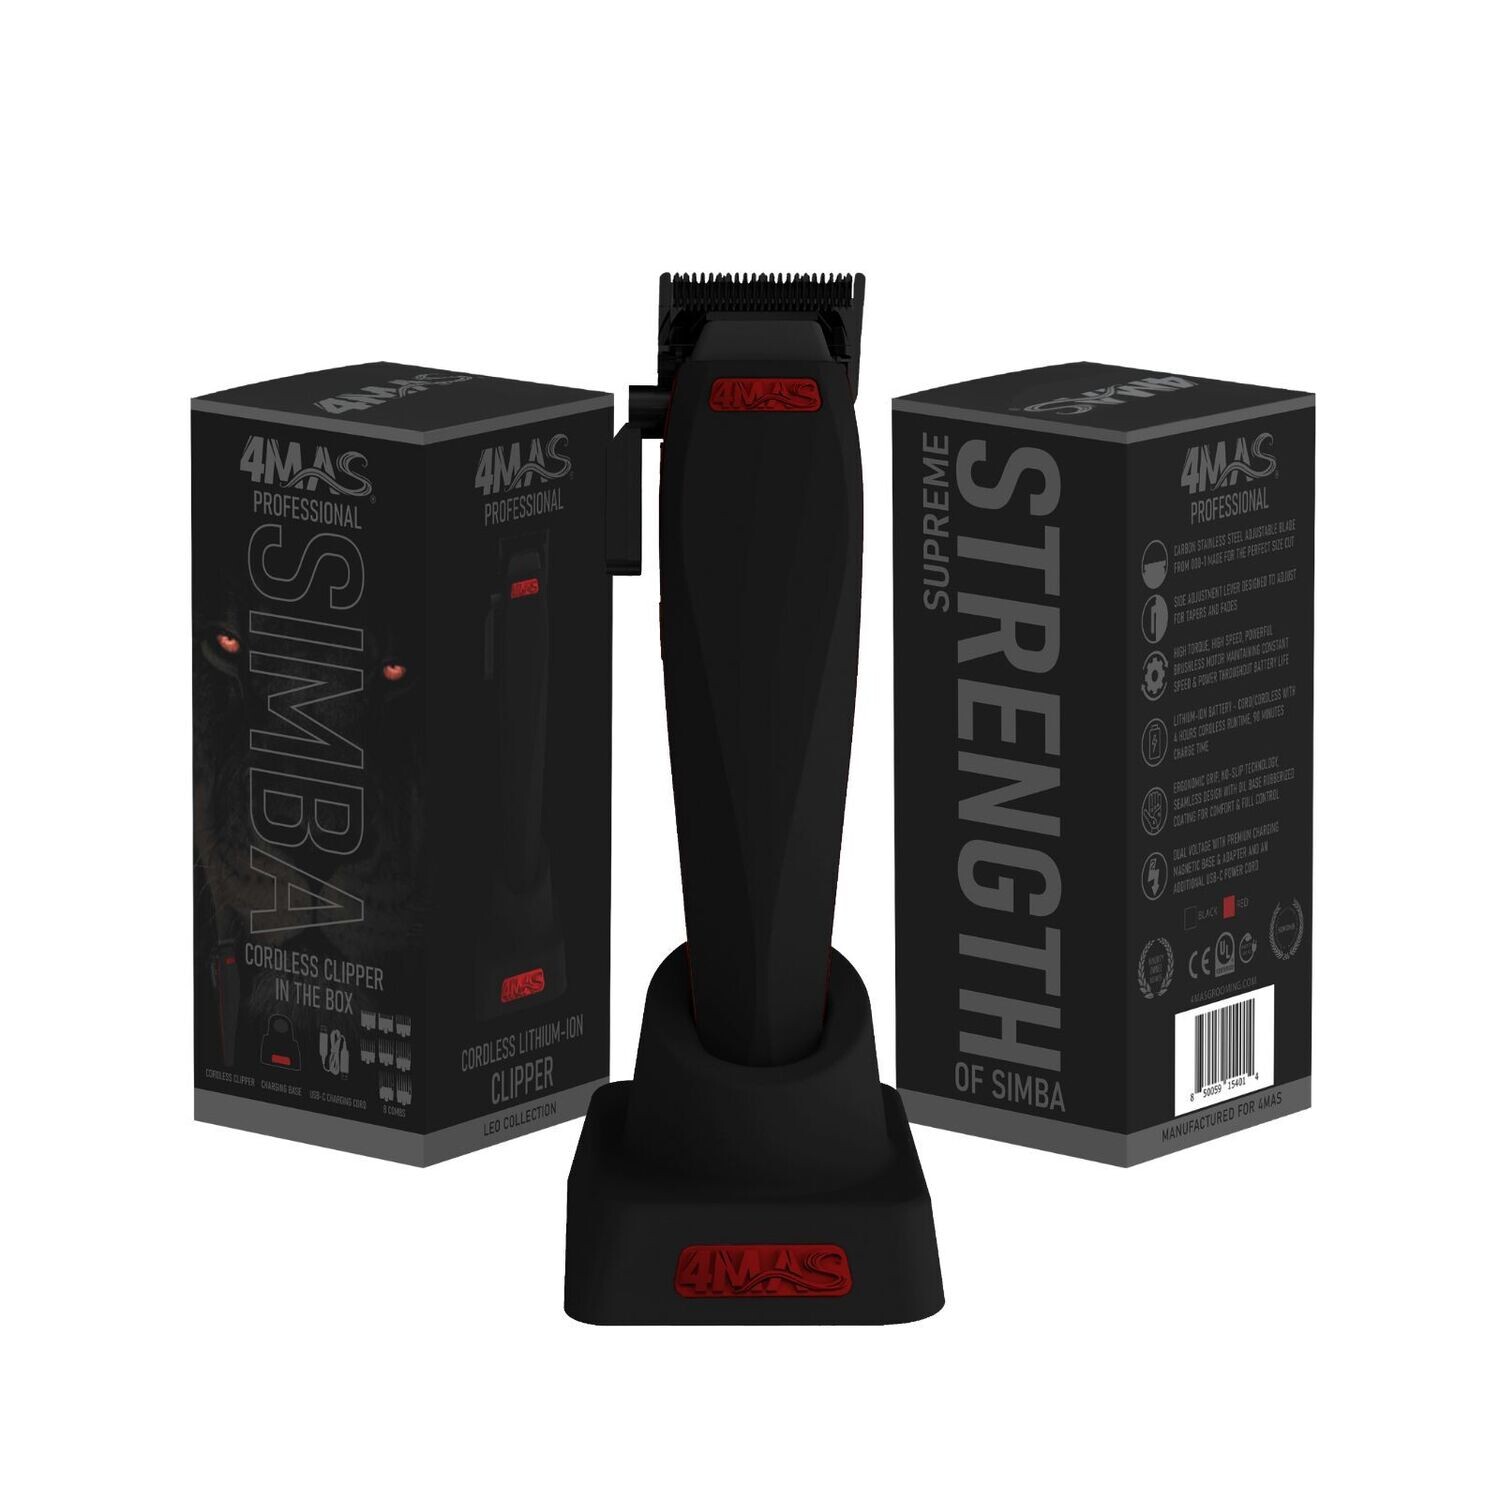 4MAS Simba Cordless Clipper 2.0 (Black & Red)